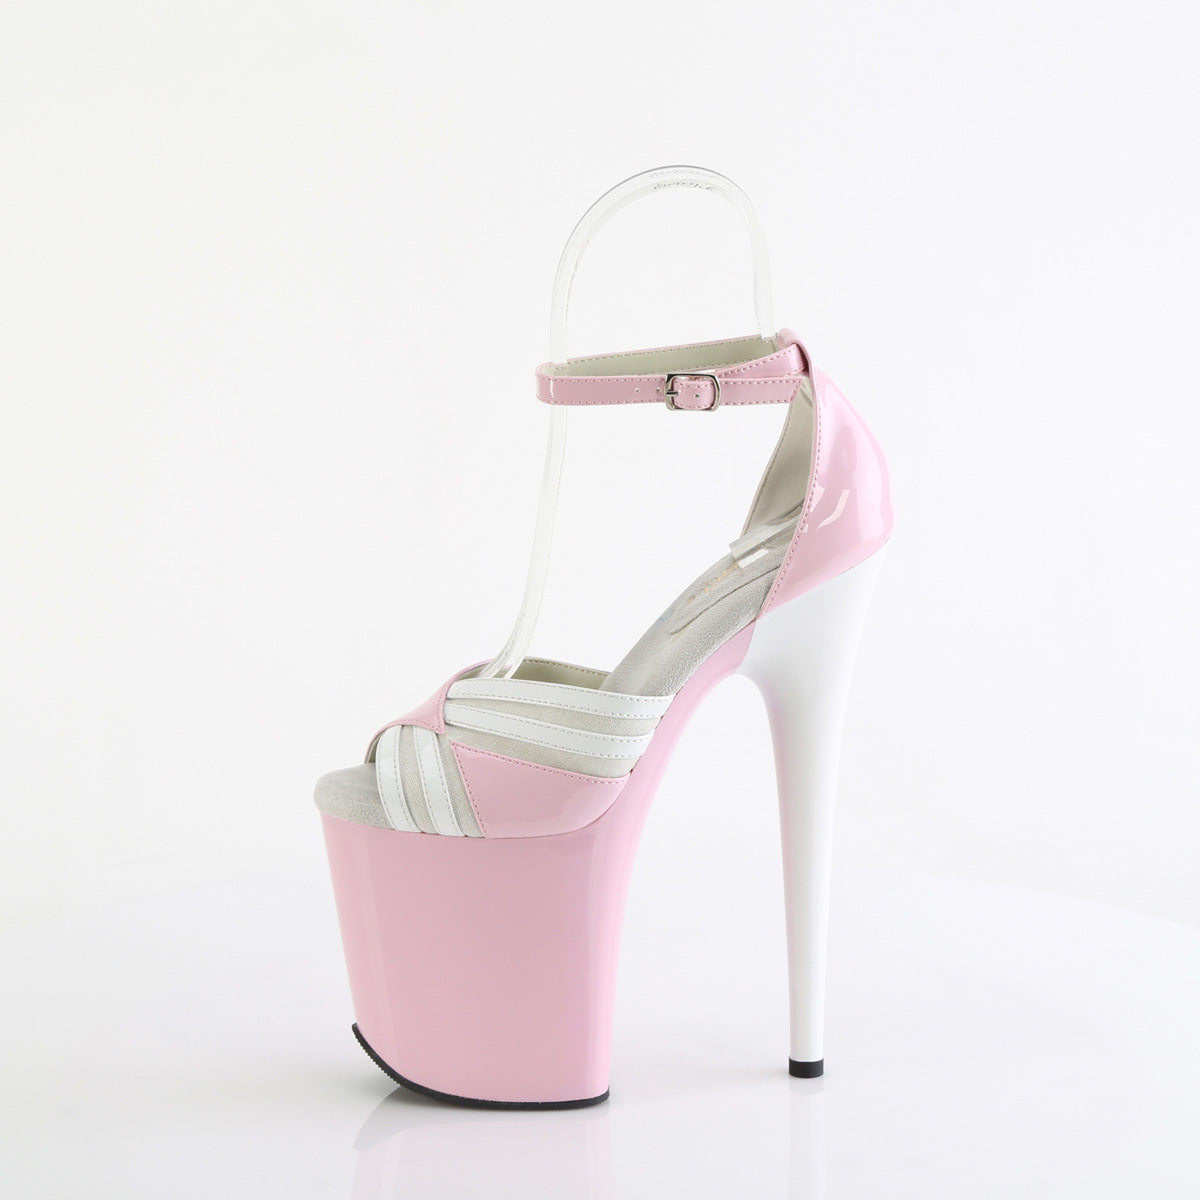 FLAMINGO-884 - Baby Pink-White Heels